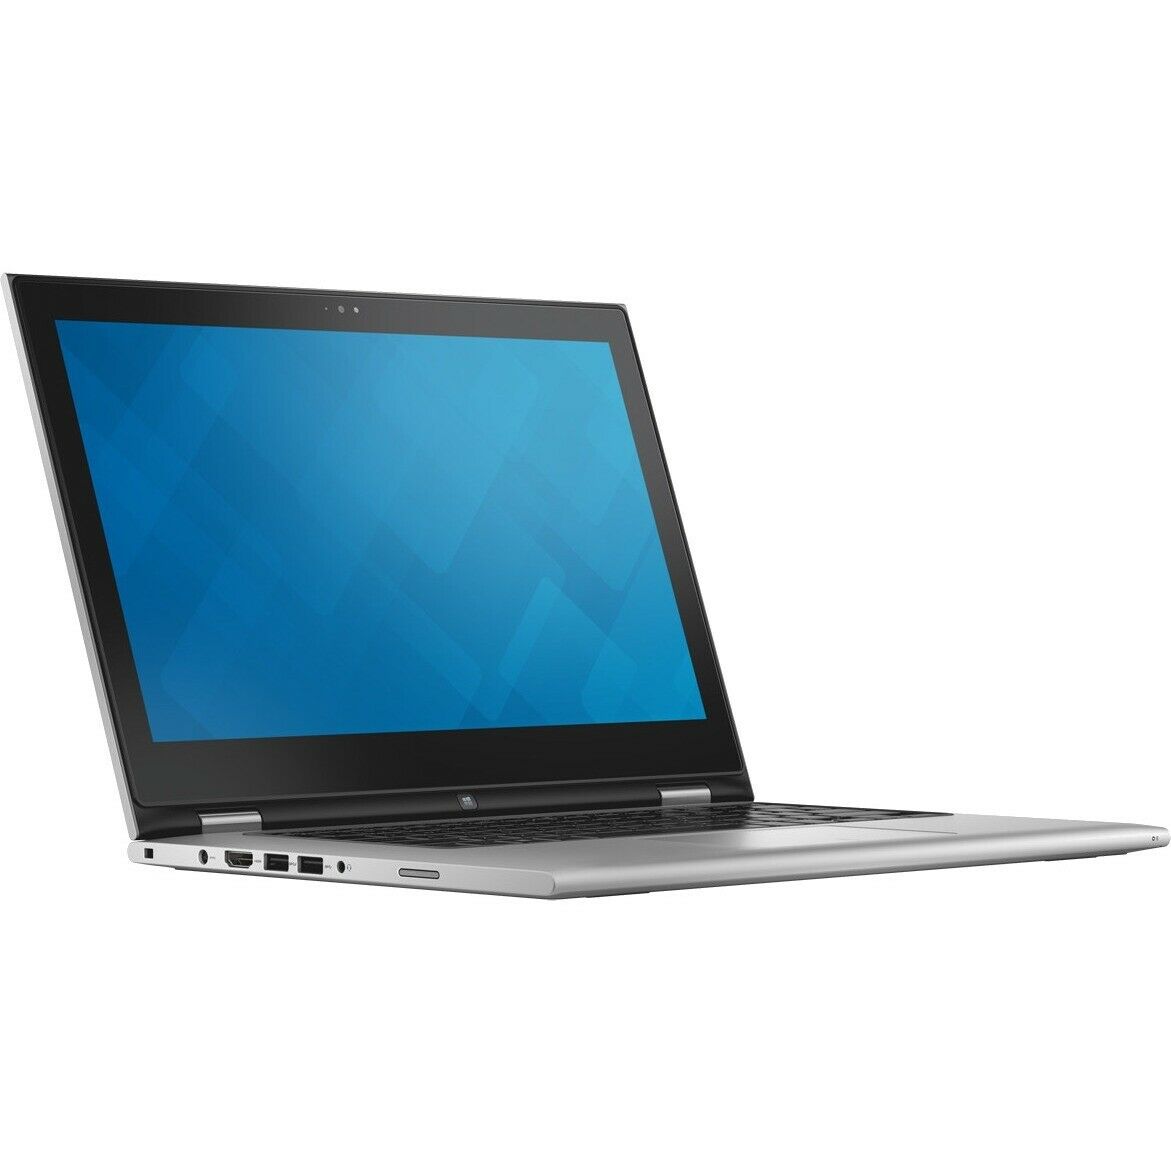 Dell Inspiron 13 7000 13" Notebook Laptop i7-6500U 8GB 2.2GHz SSD 119GB, Silver